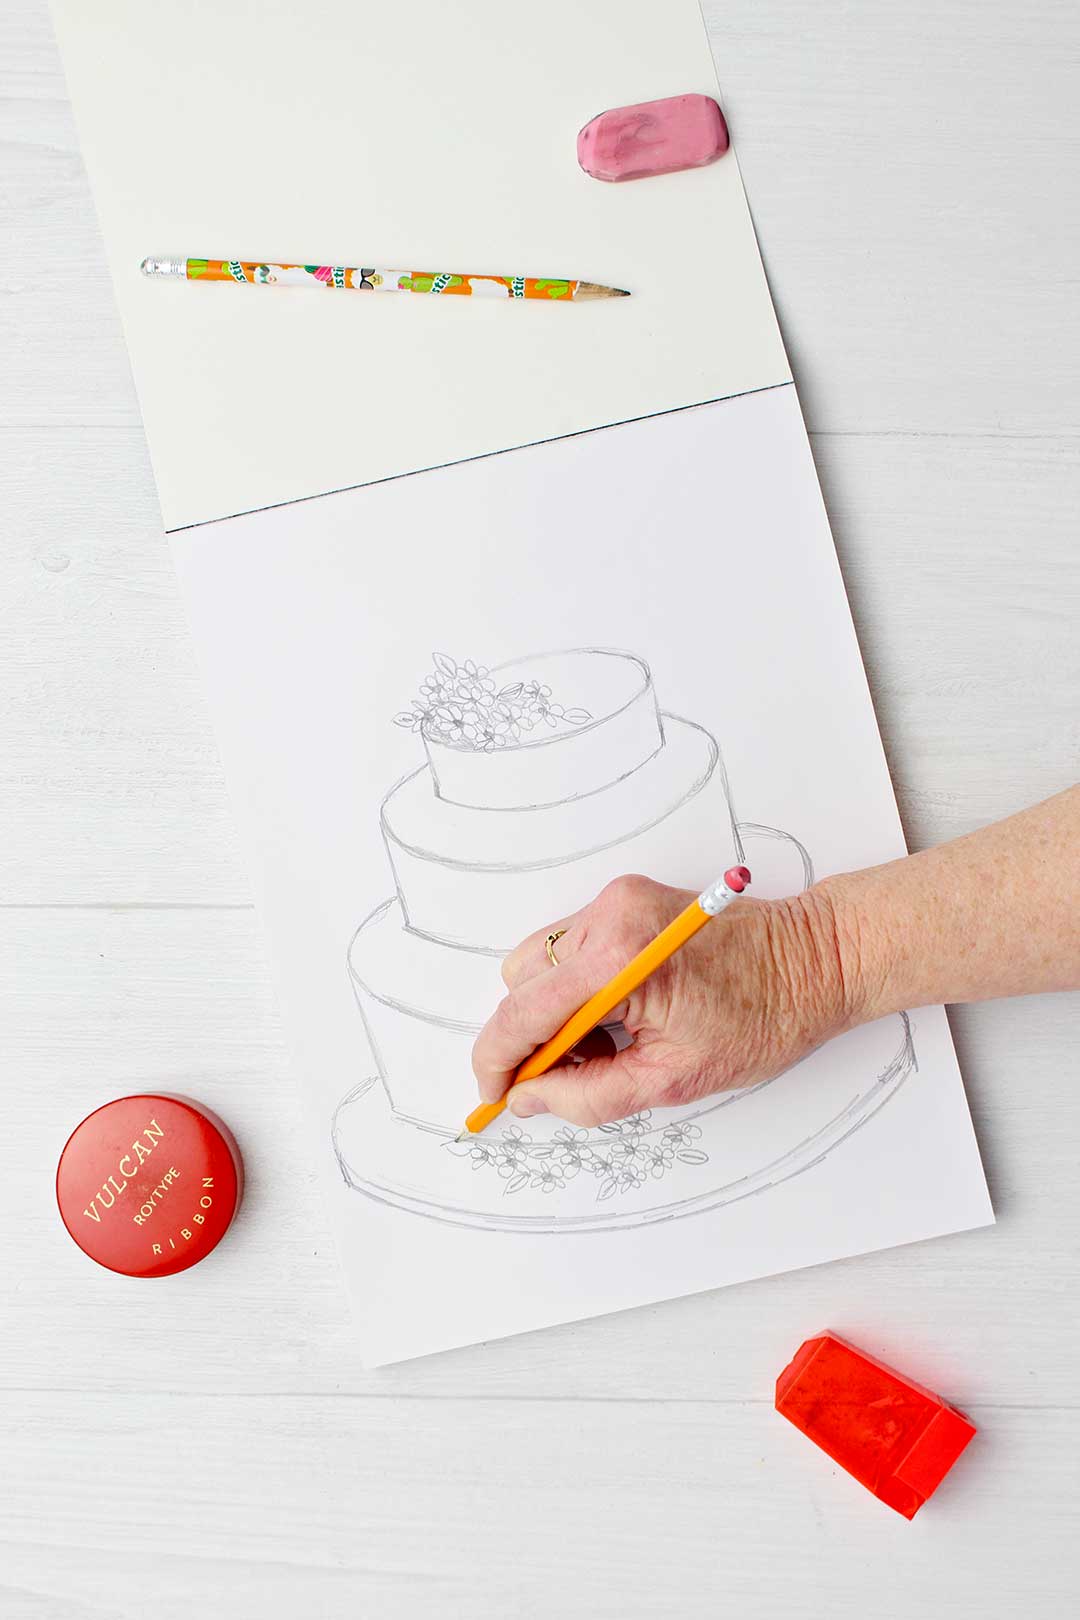 Hand sketching flowers on bottom of wedding cake.